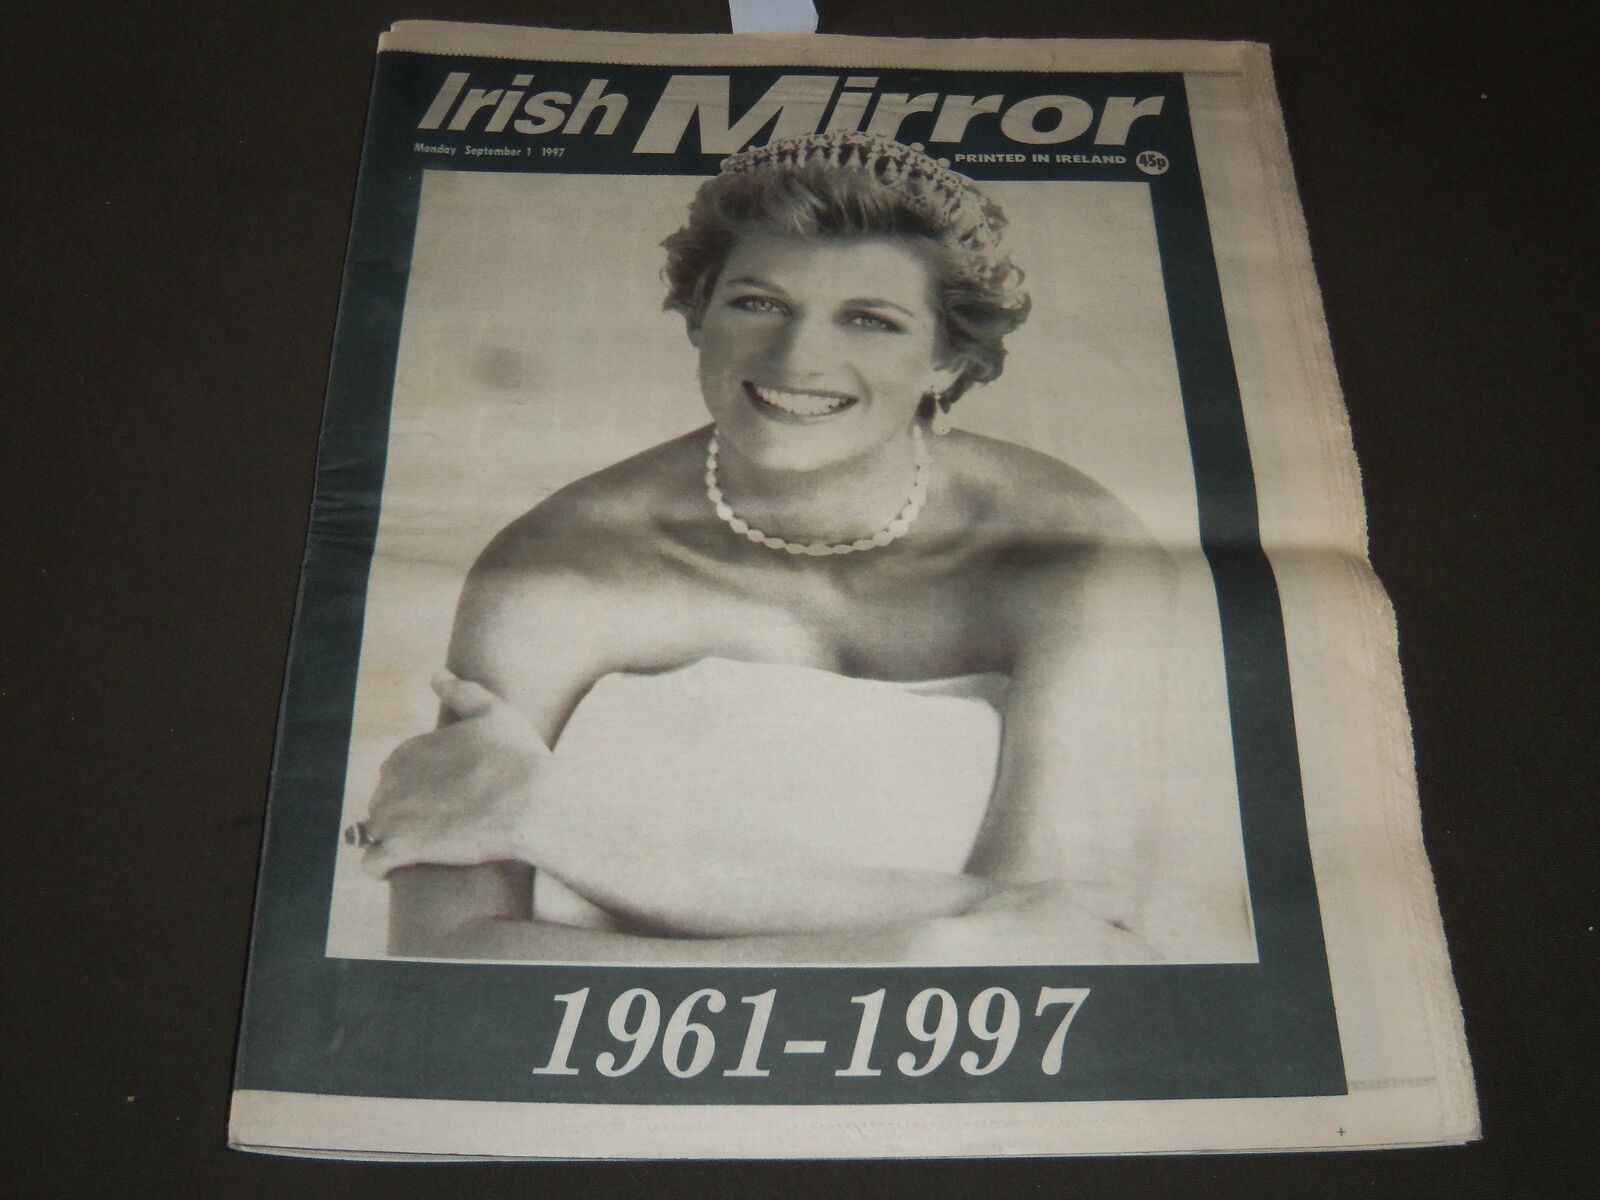 1997 SEPTEMBER 1 IRISH MIRROR DIANA NEWSPAPER 1961-1997 - NICE PHOTOS - NP 2640